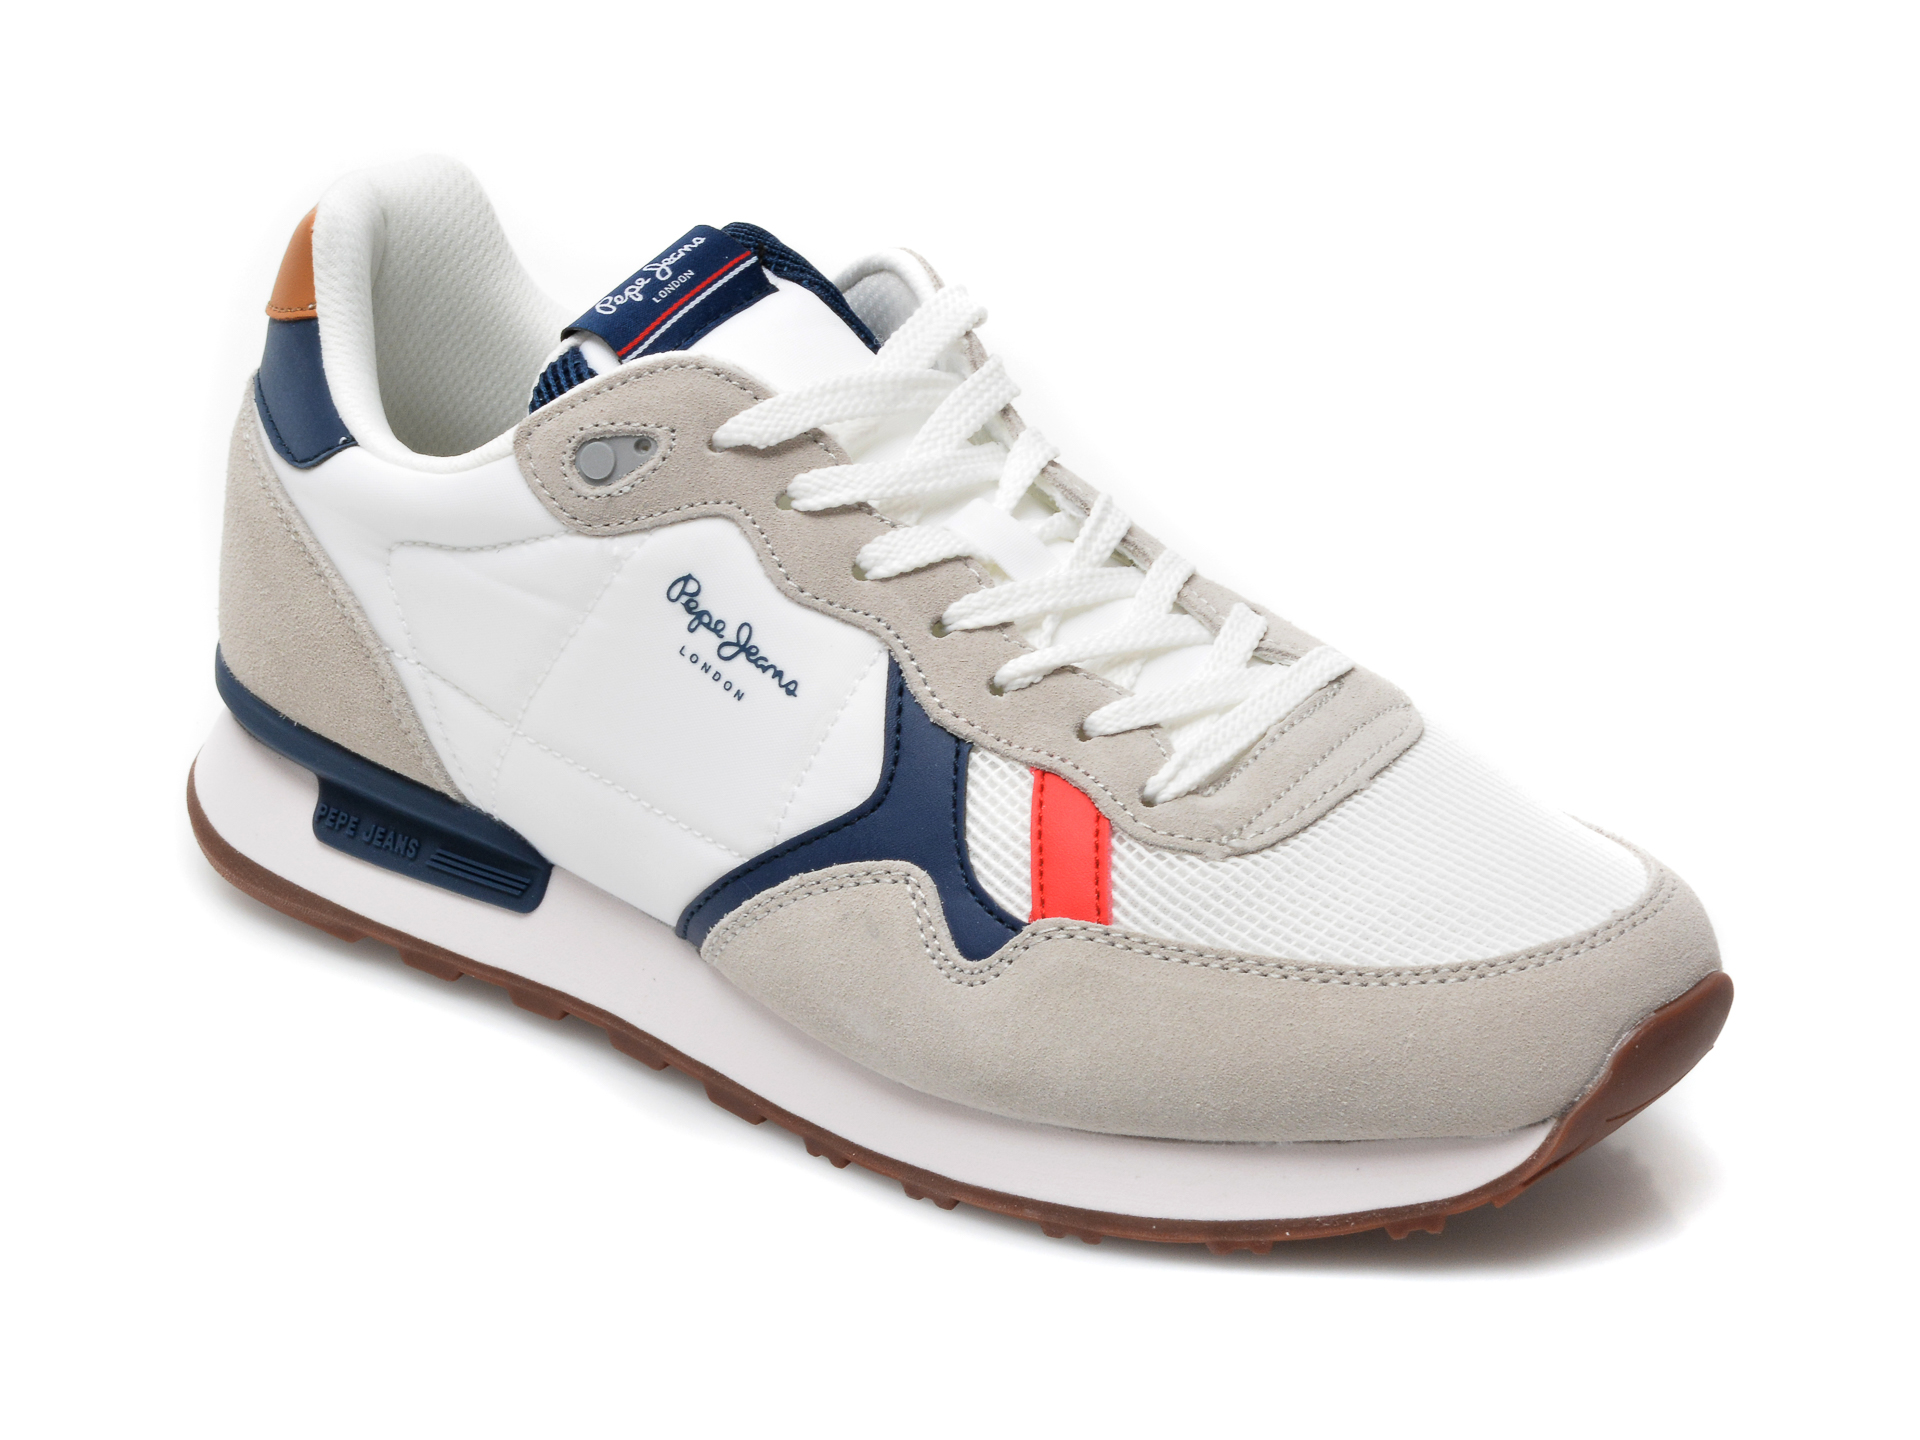 Pantofi sport PEPE JEANS albi, 3072199, din material textil si piele naturala